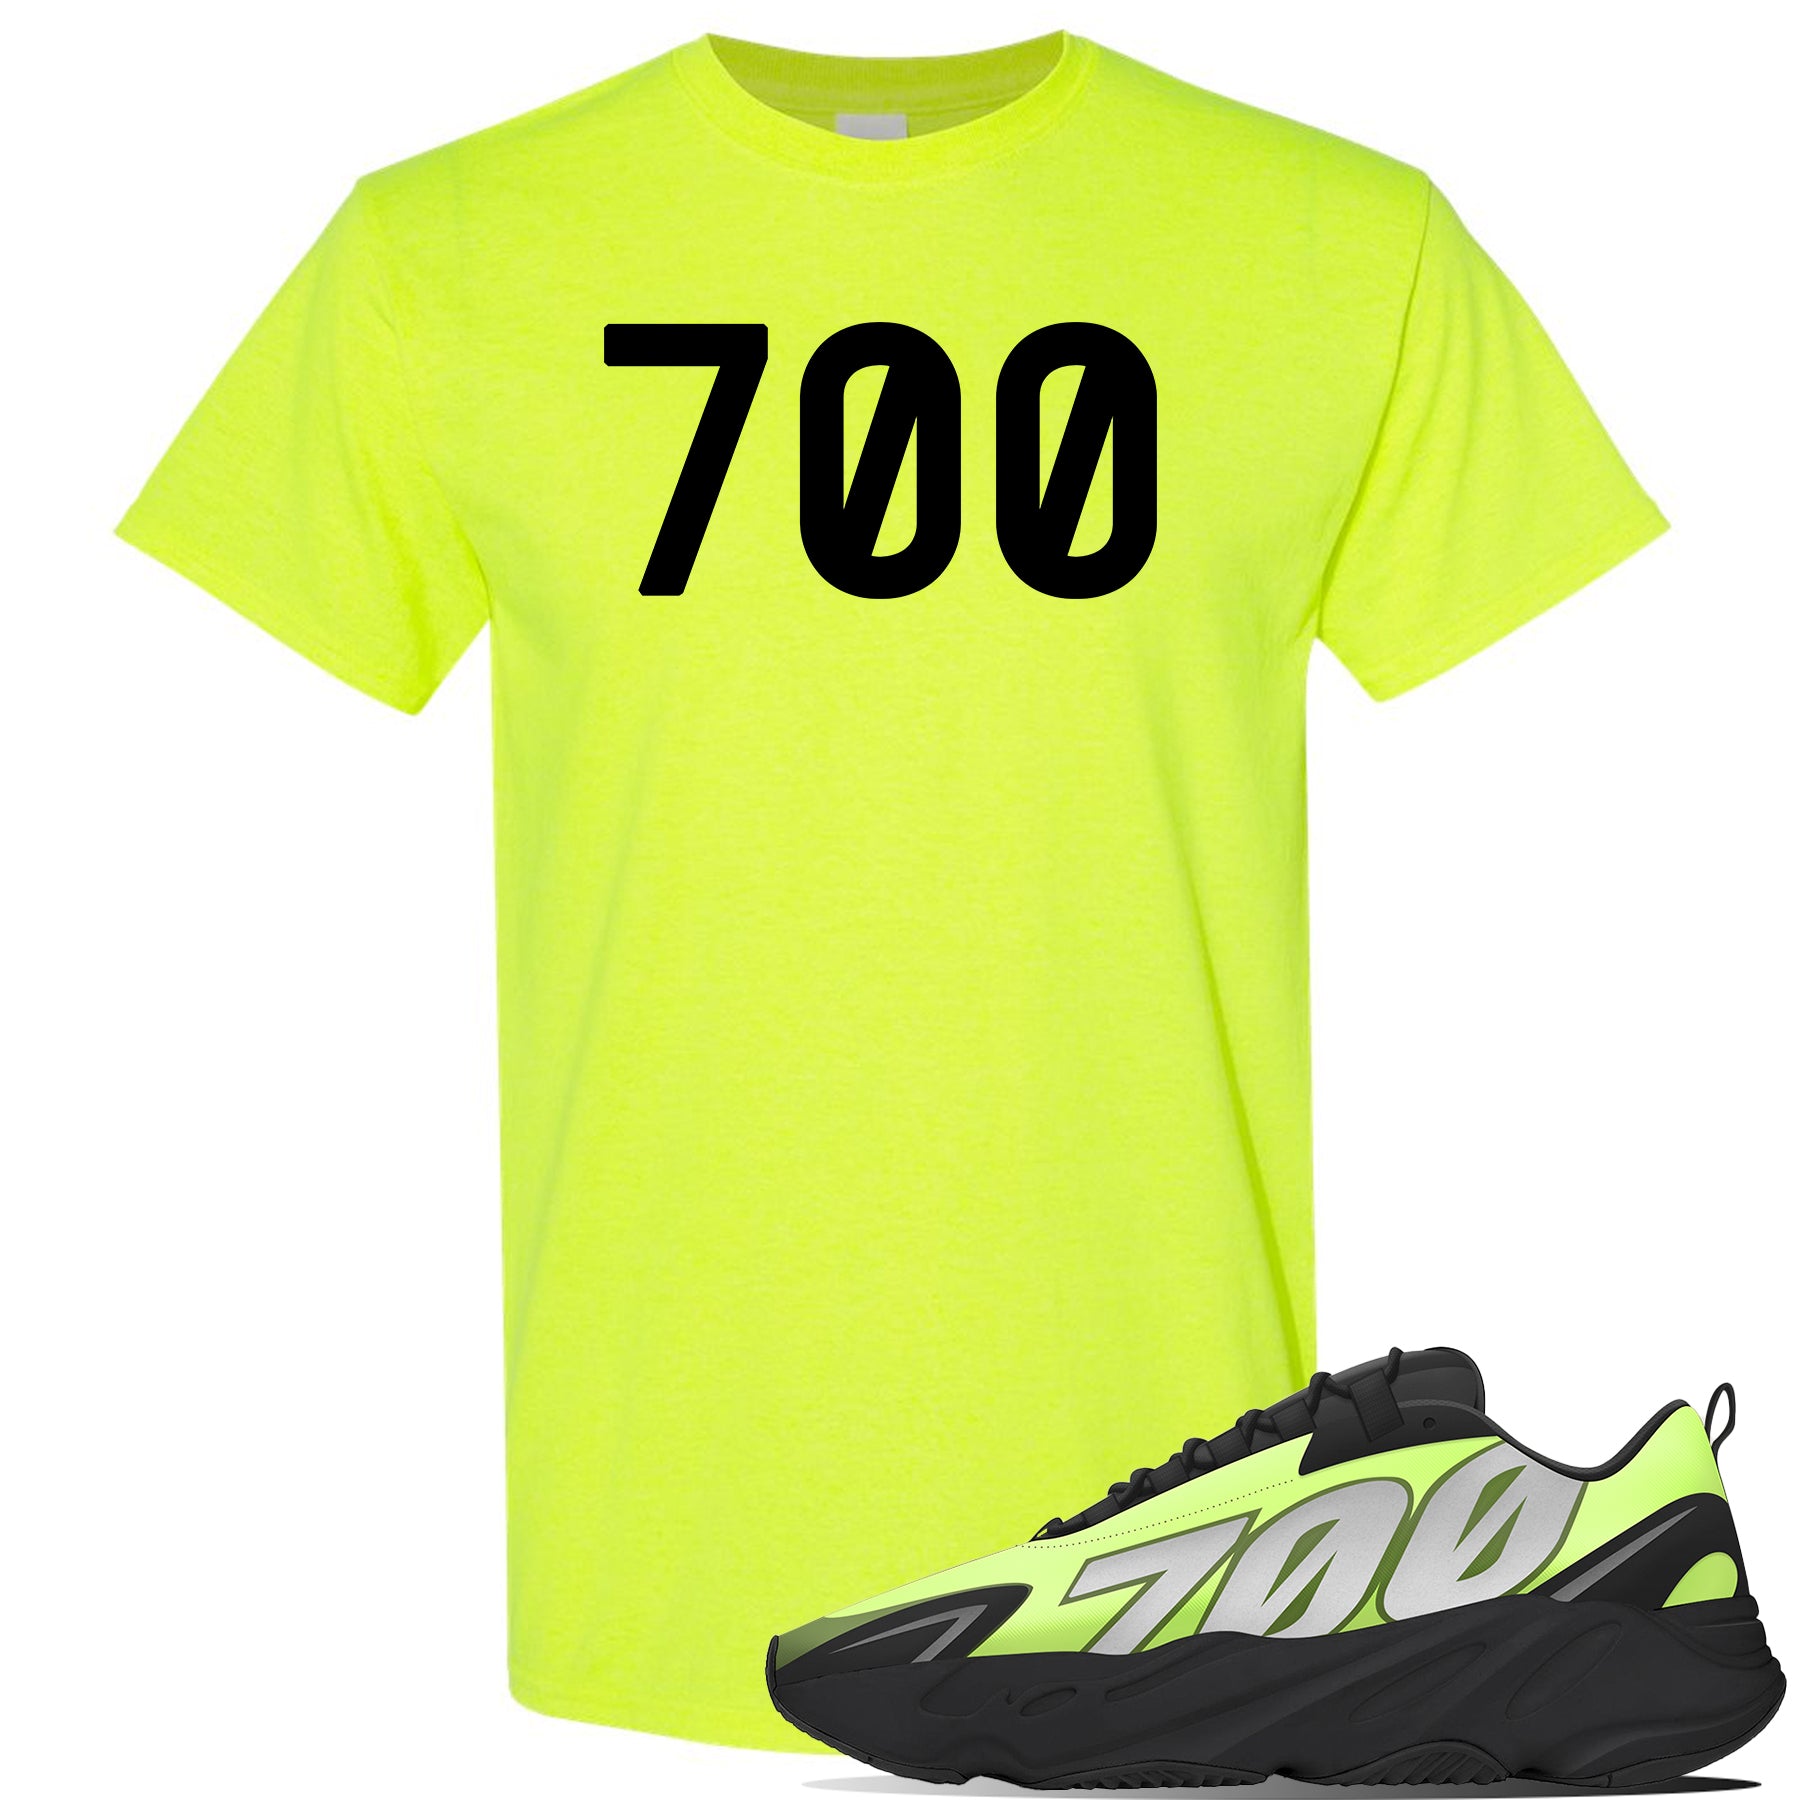 green yeezy 700